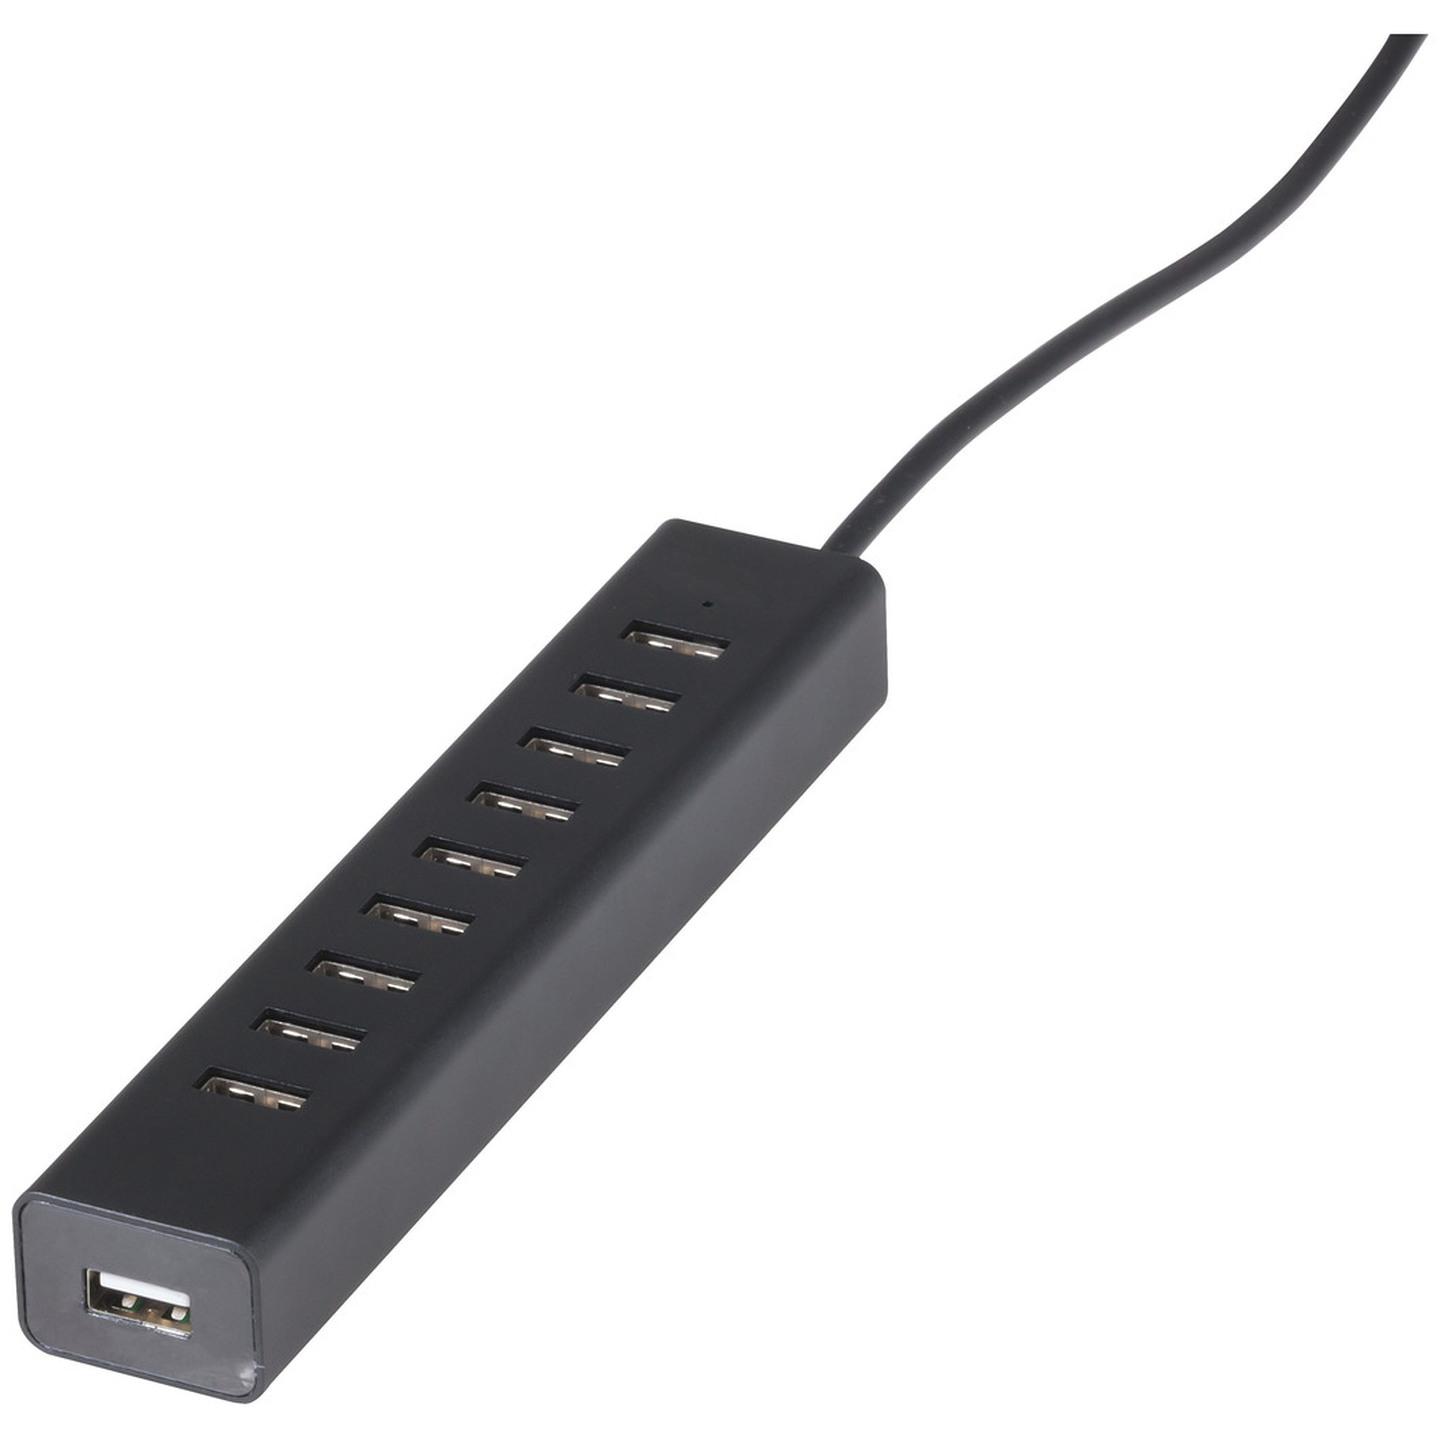 Slimline 10-Port USB Charger and Hub